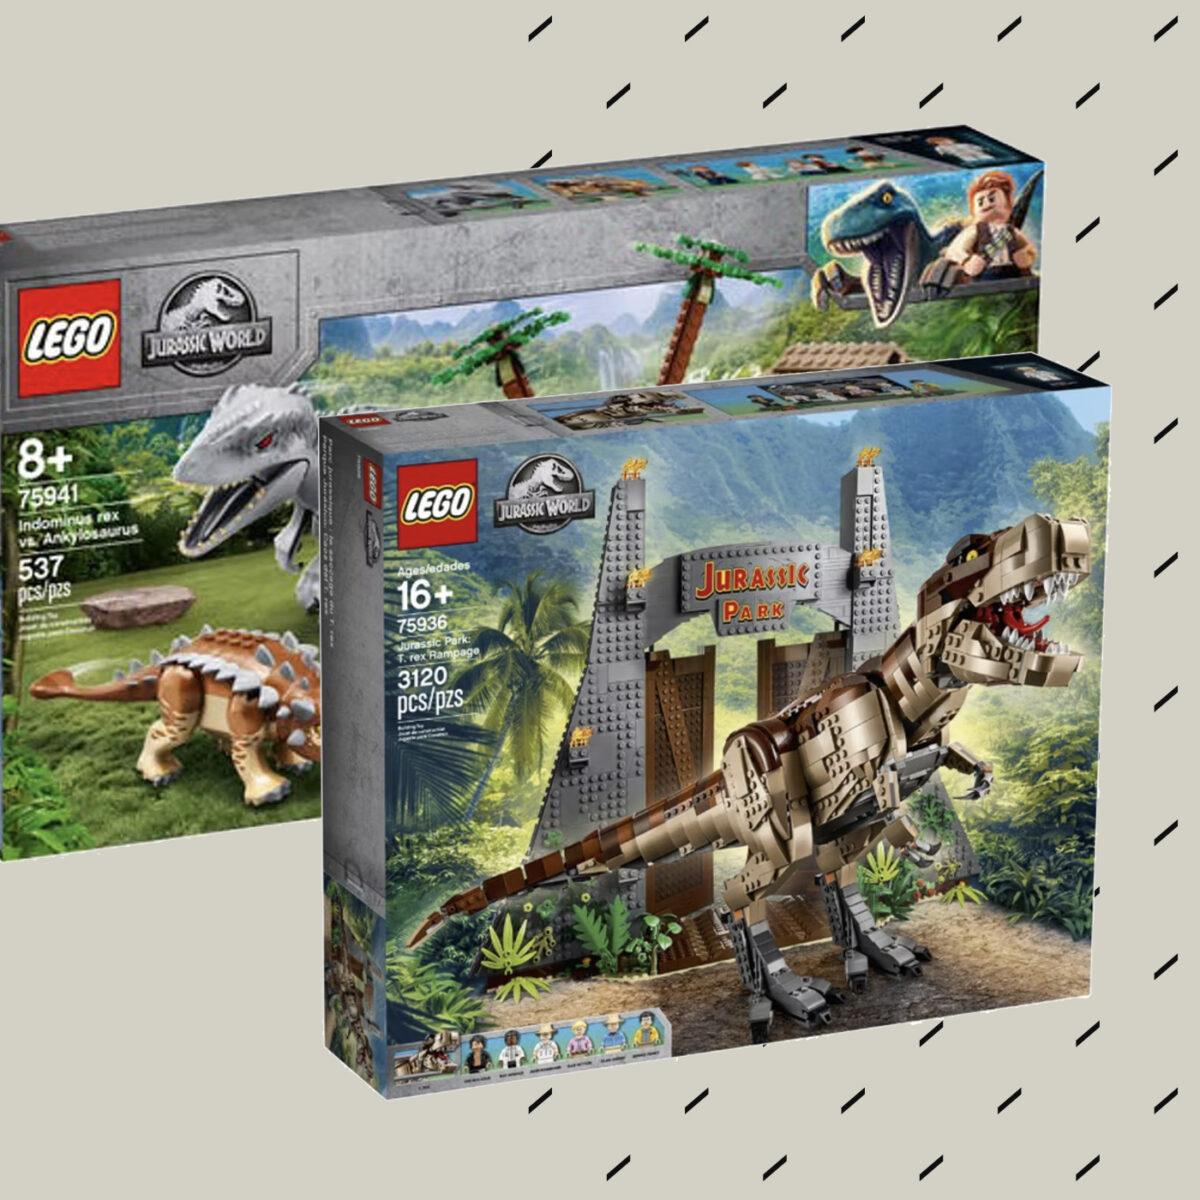 The Best of LEGO Jurassic World - StockX News